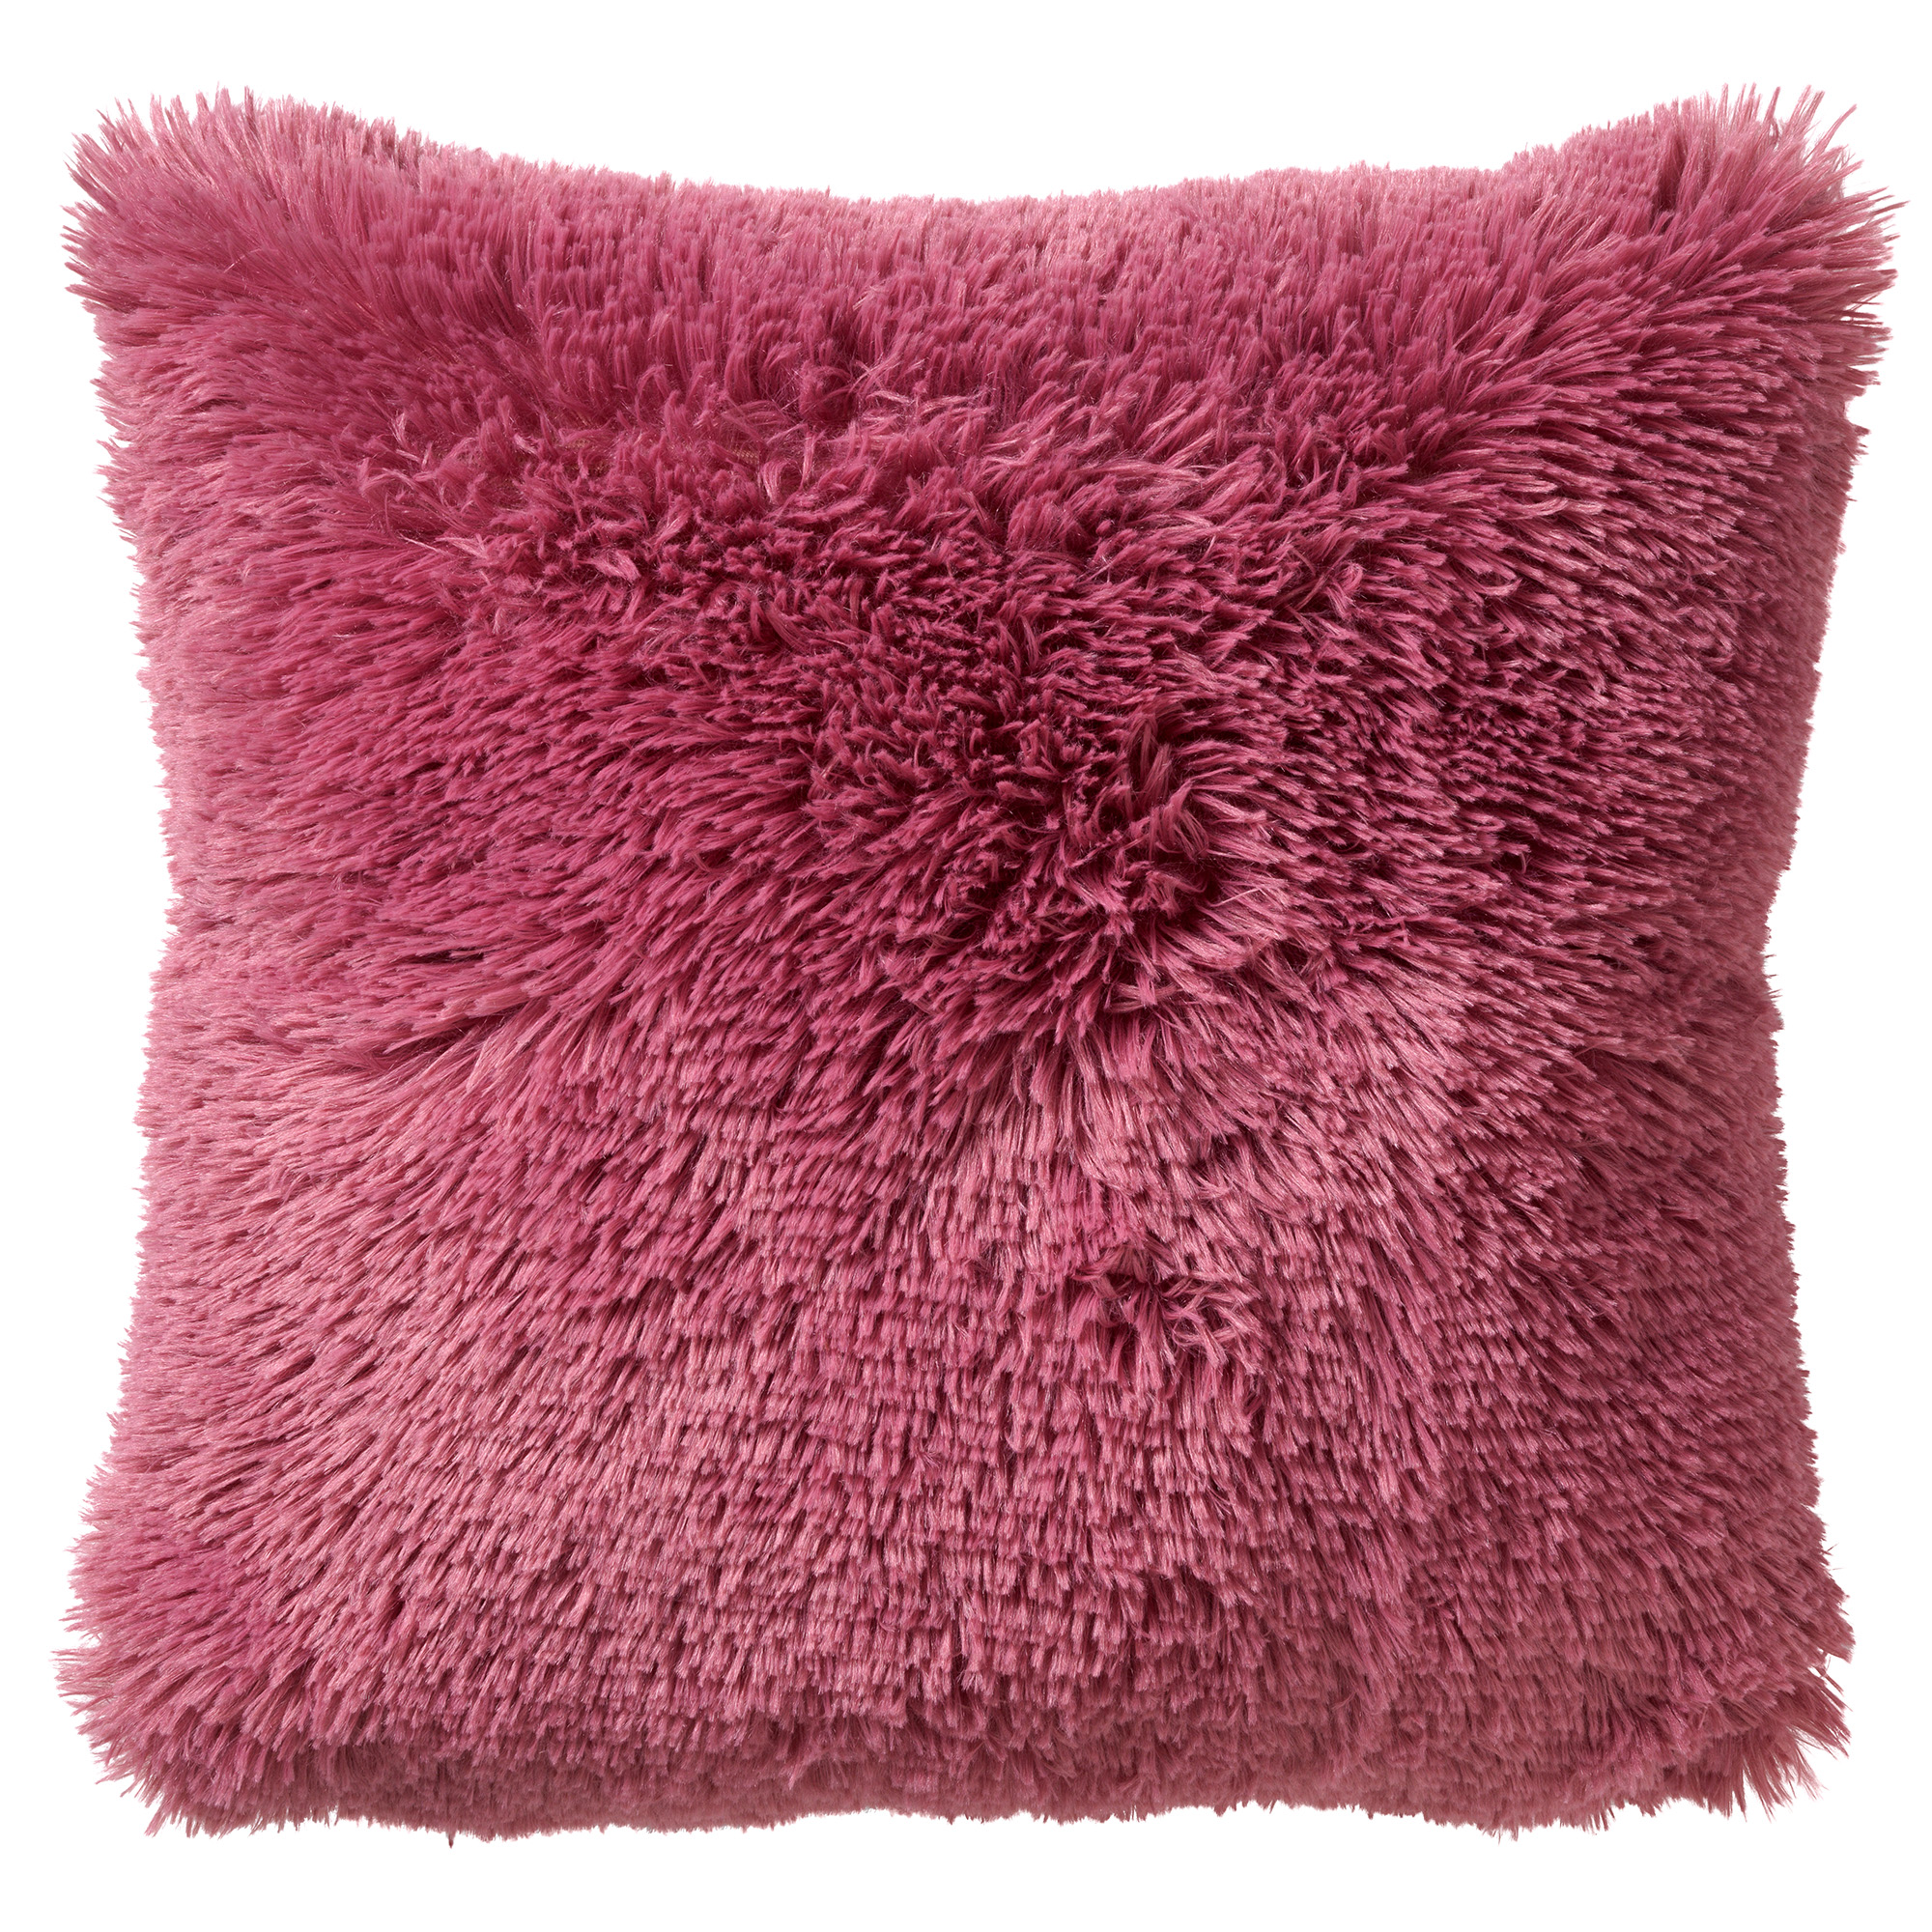 FLUFFY - Sierkussen unikleur 60x60 cm - Heather Rose - roze